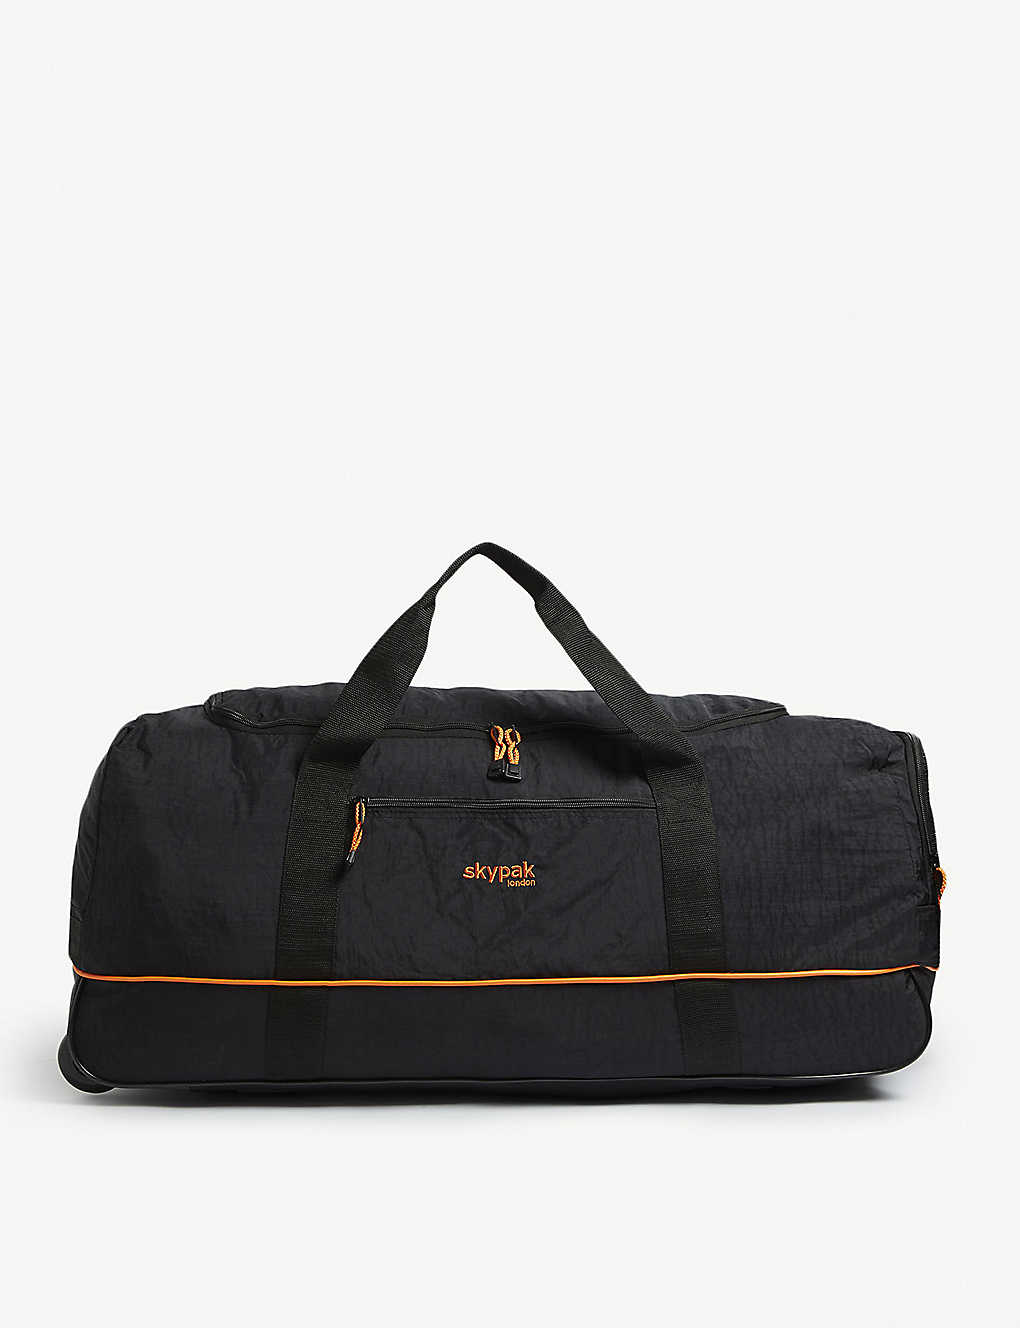 Mens Selfridges & Co Men Accessories Bags Luggage Skypak Folding travel bag 